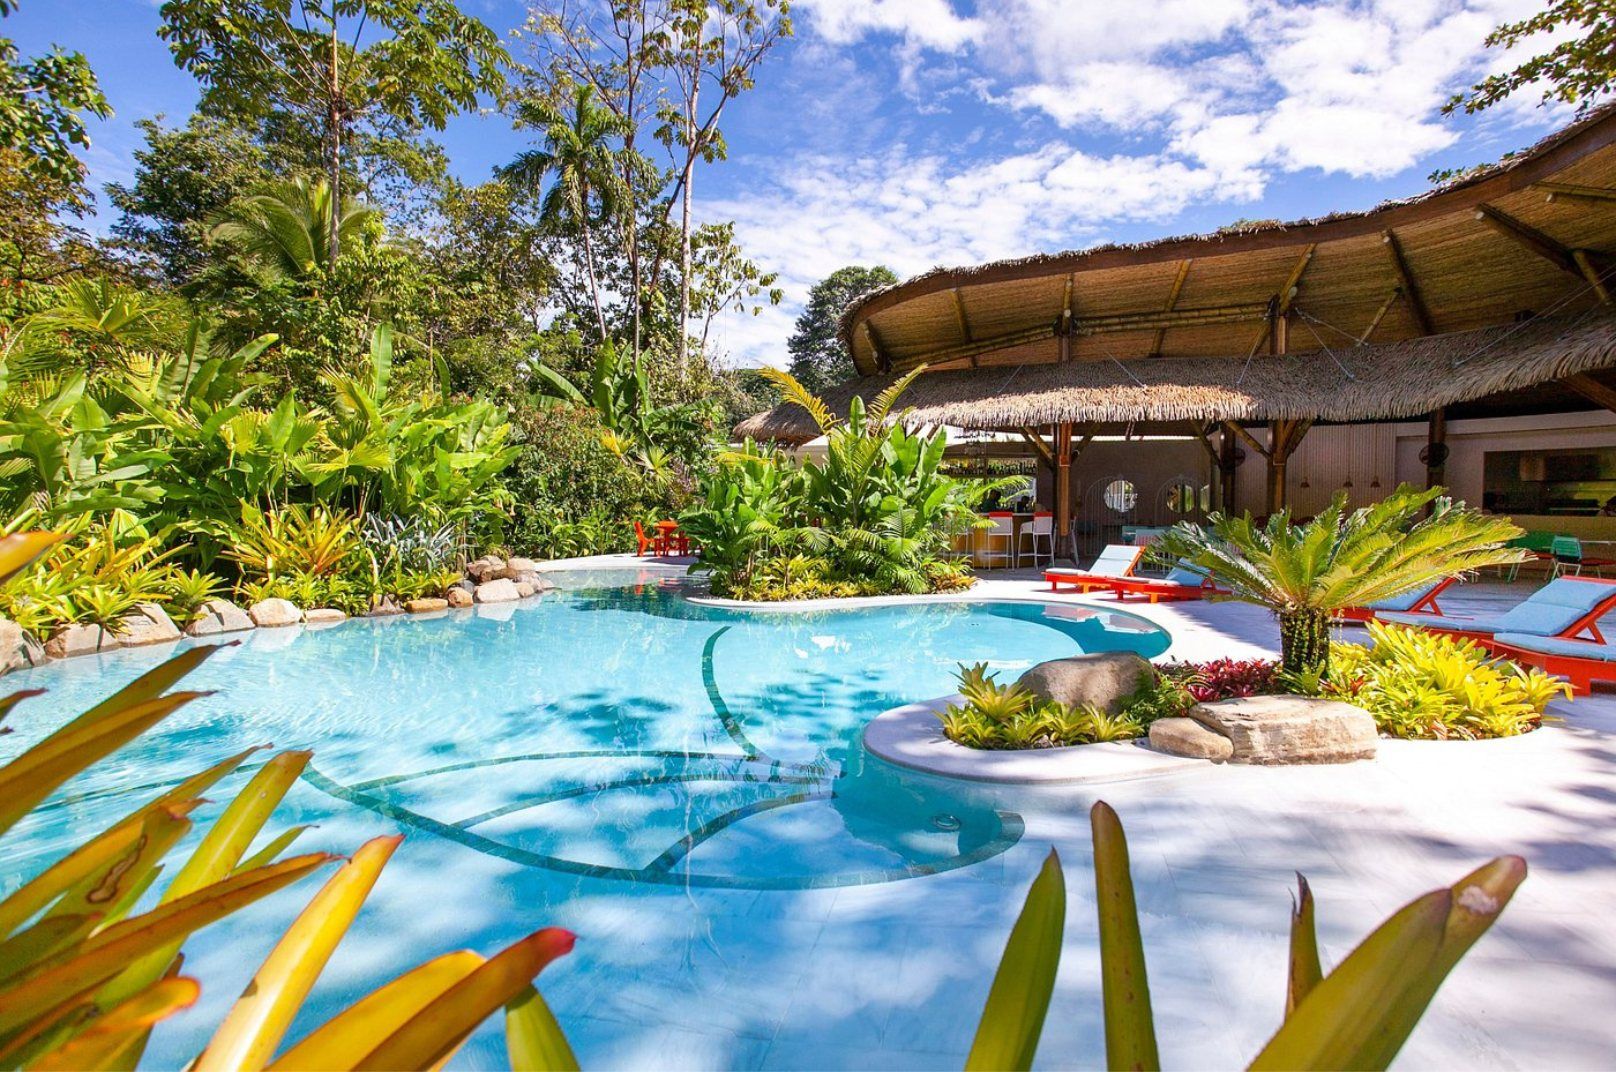 unique hotels in Costa Rica